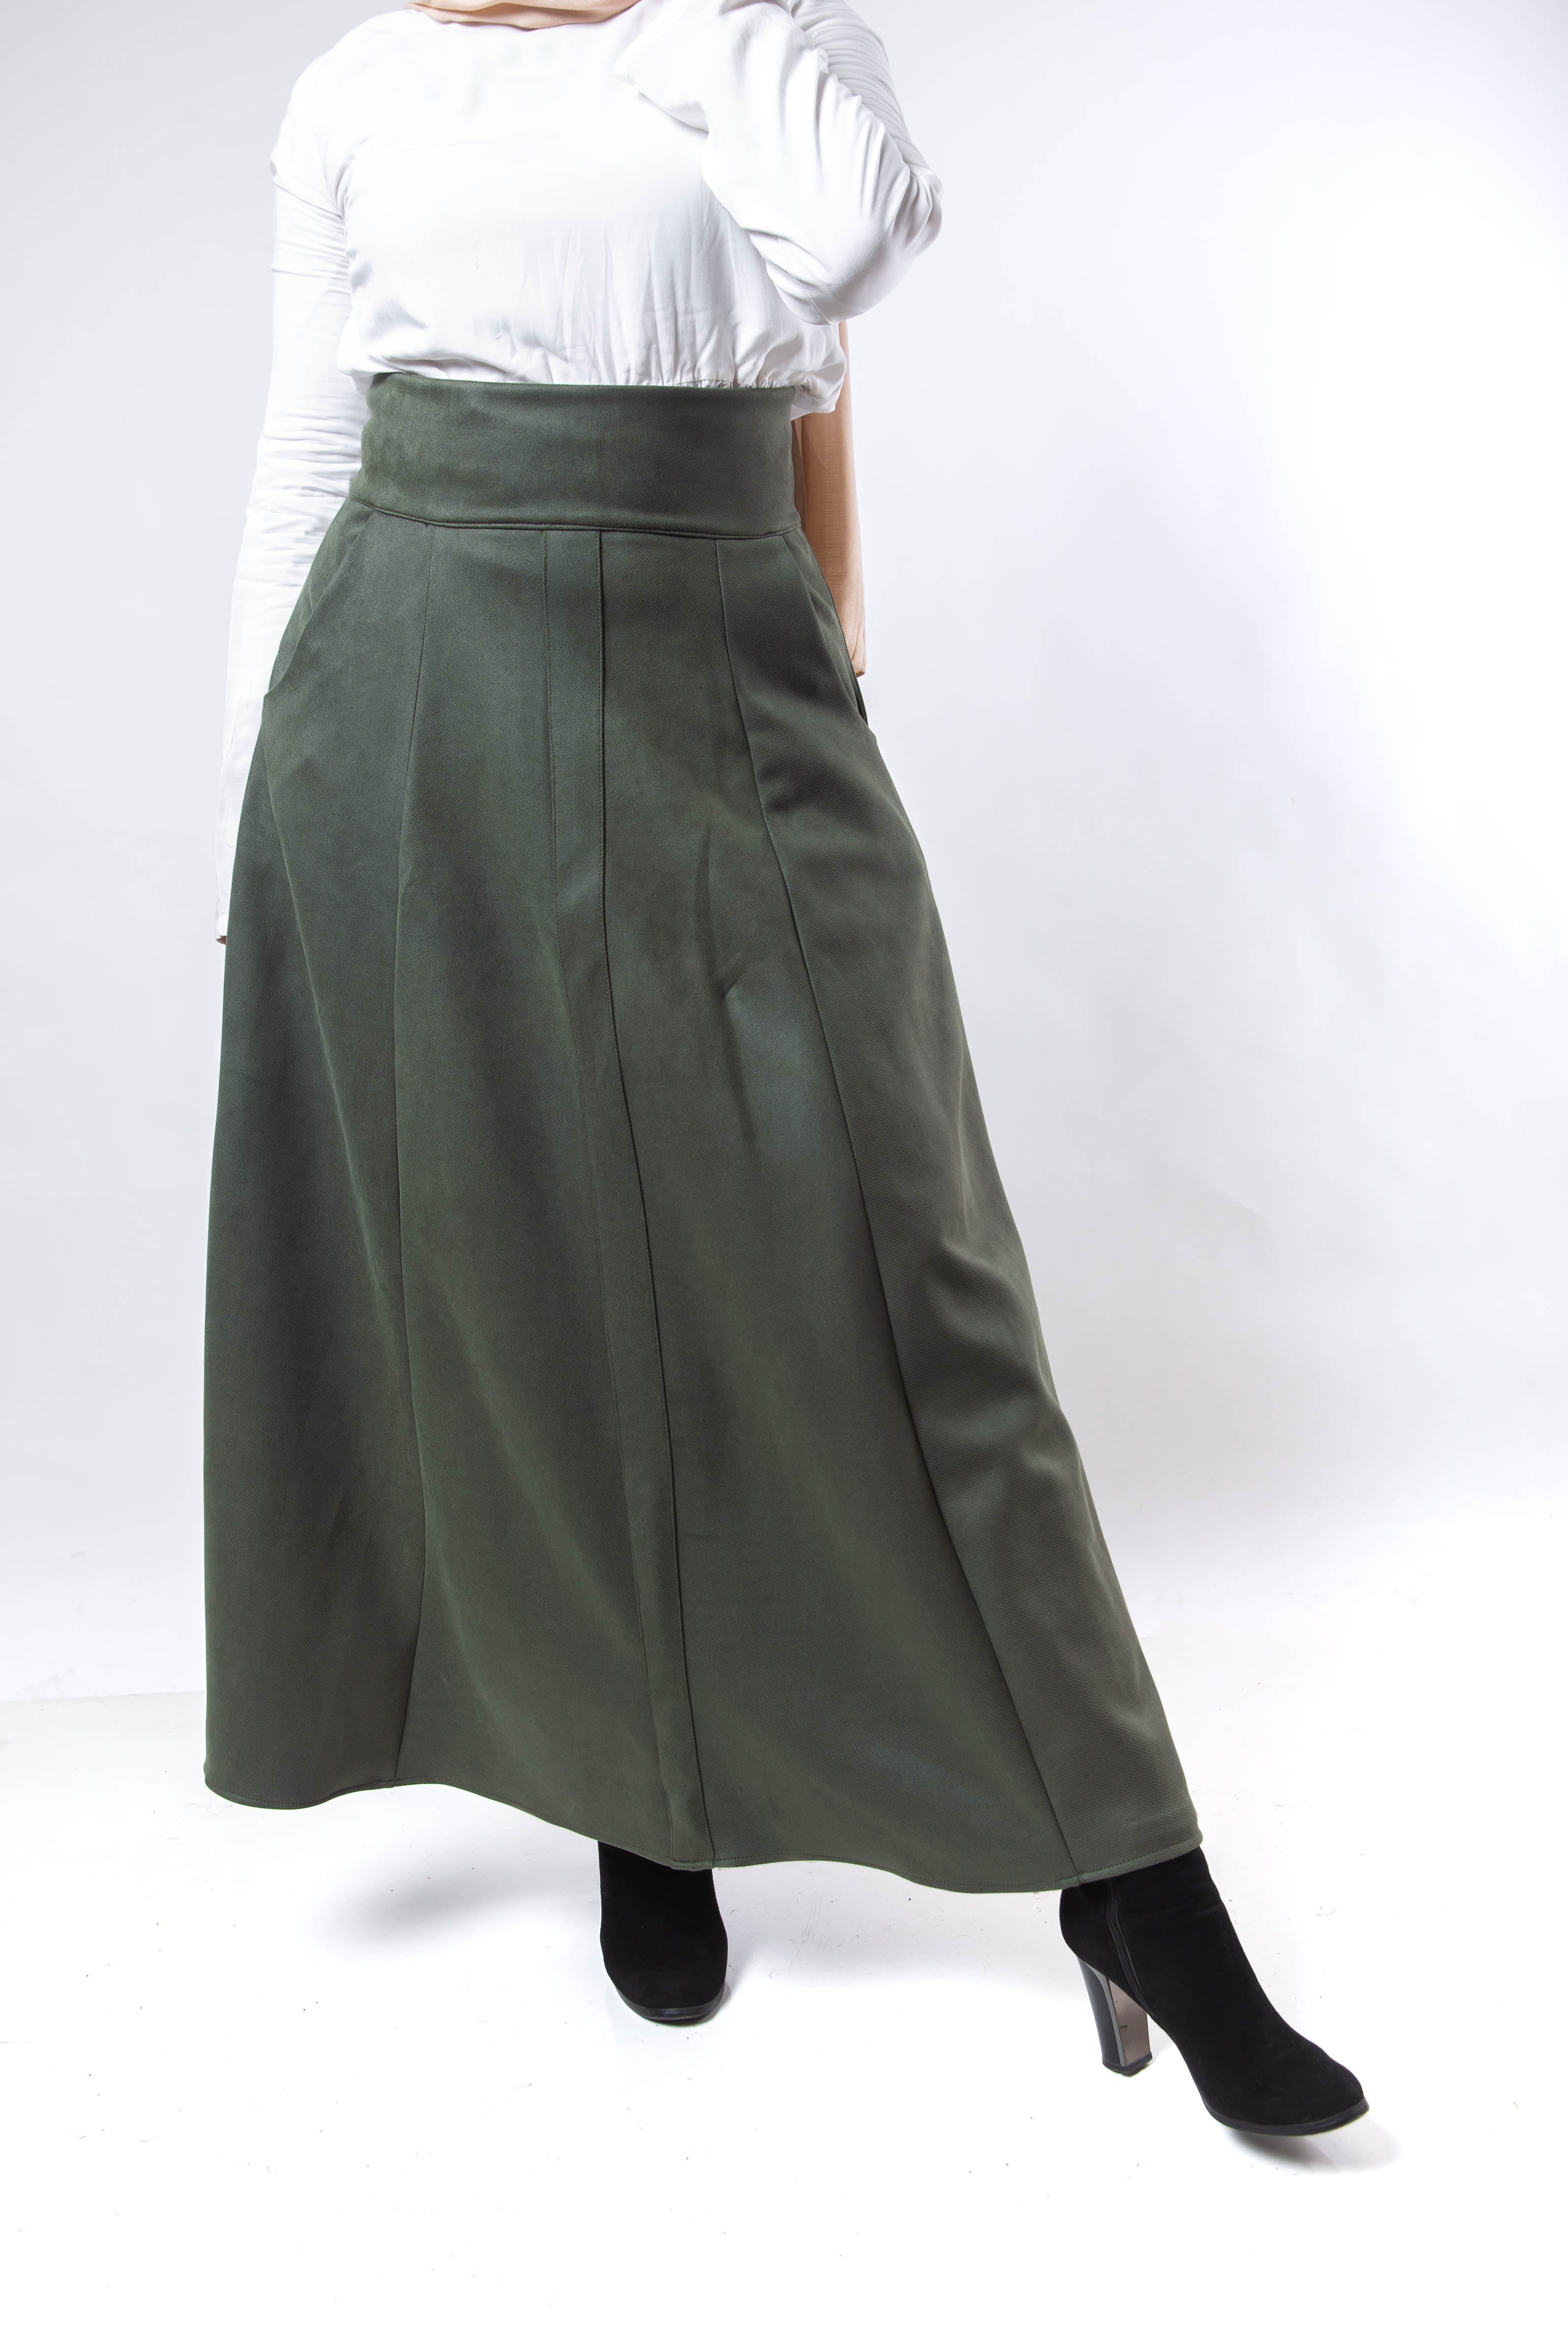 High Waist Suede Skirt - Olive